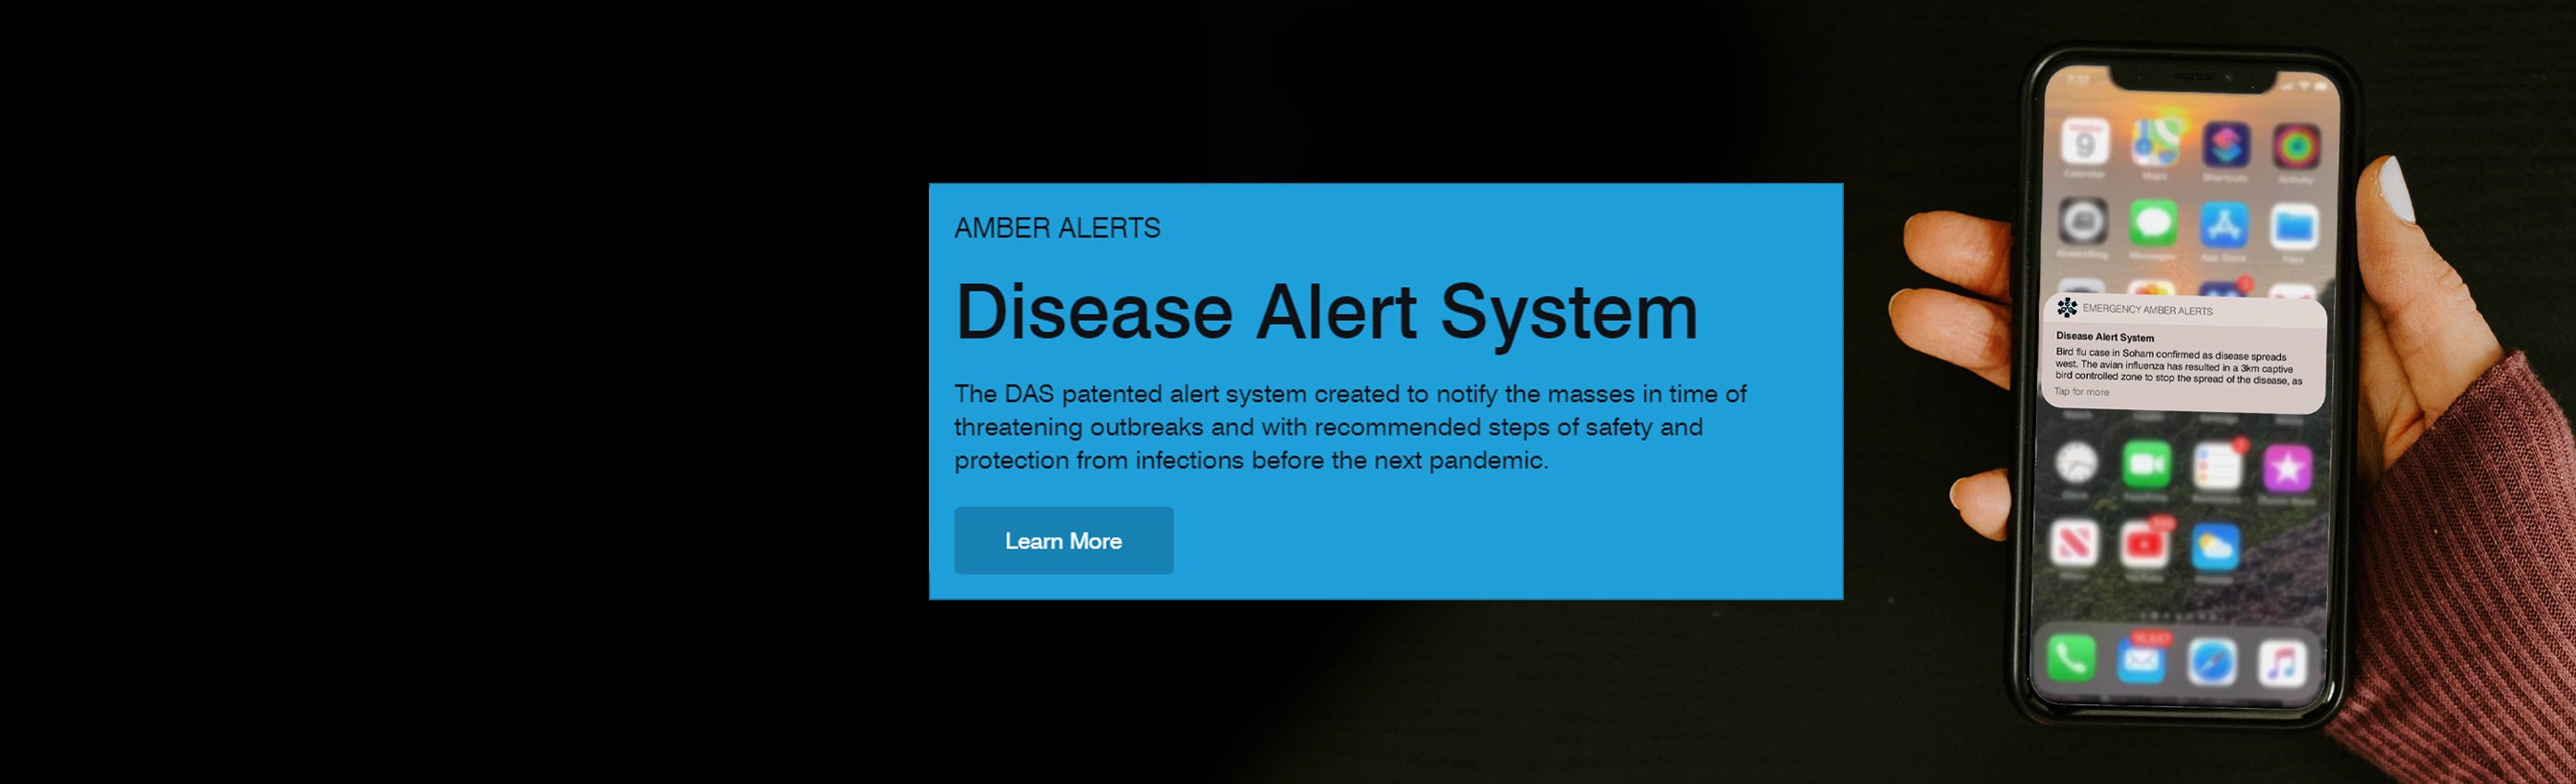 Emergency Amber Alert Disease Alert System